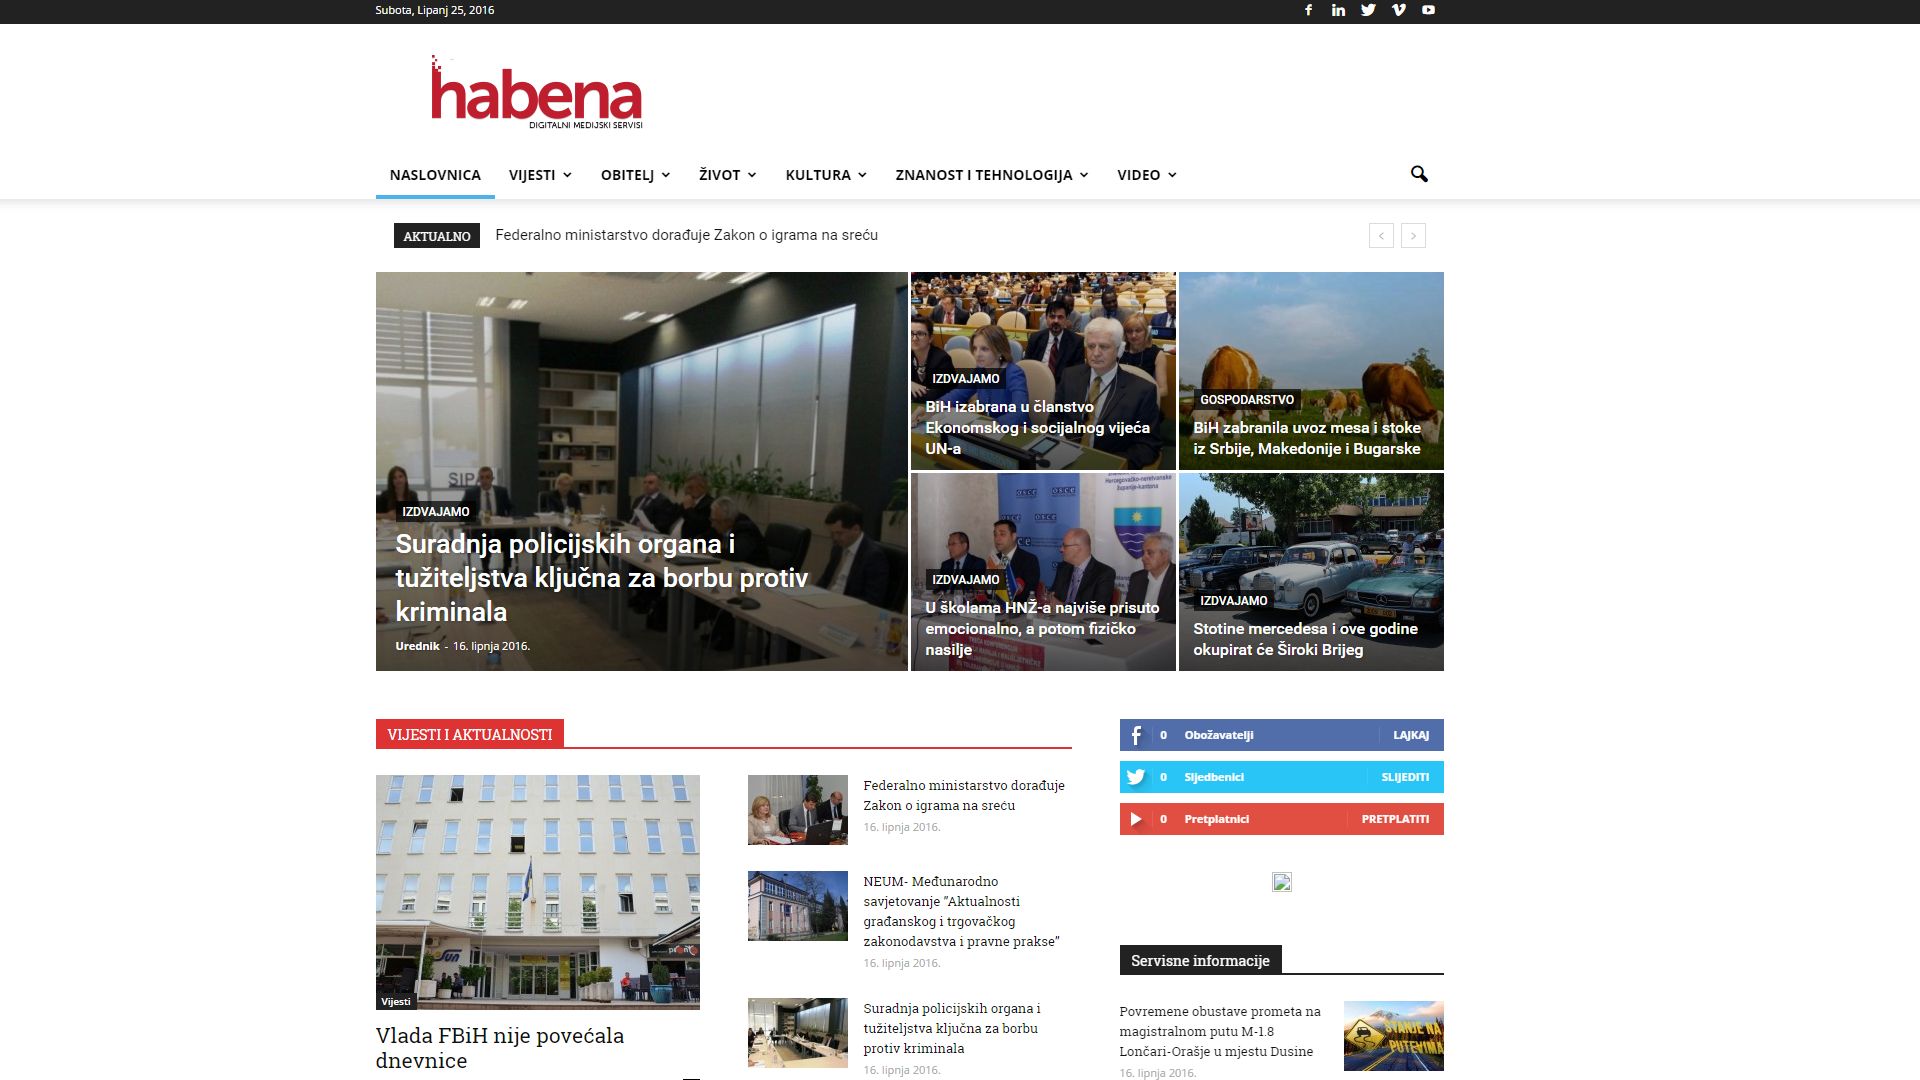 Habena media agency